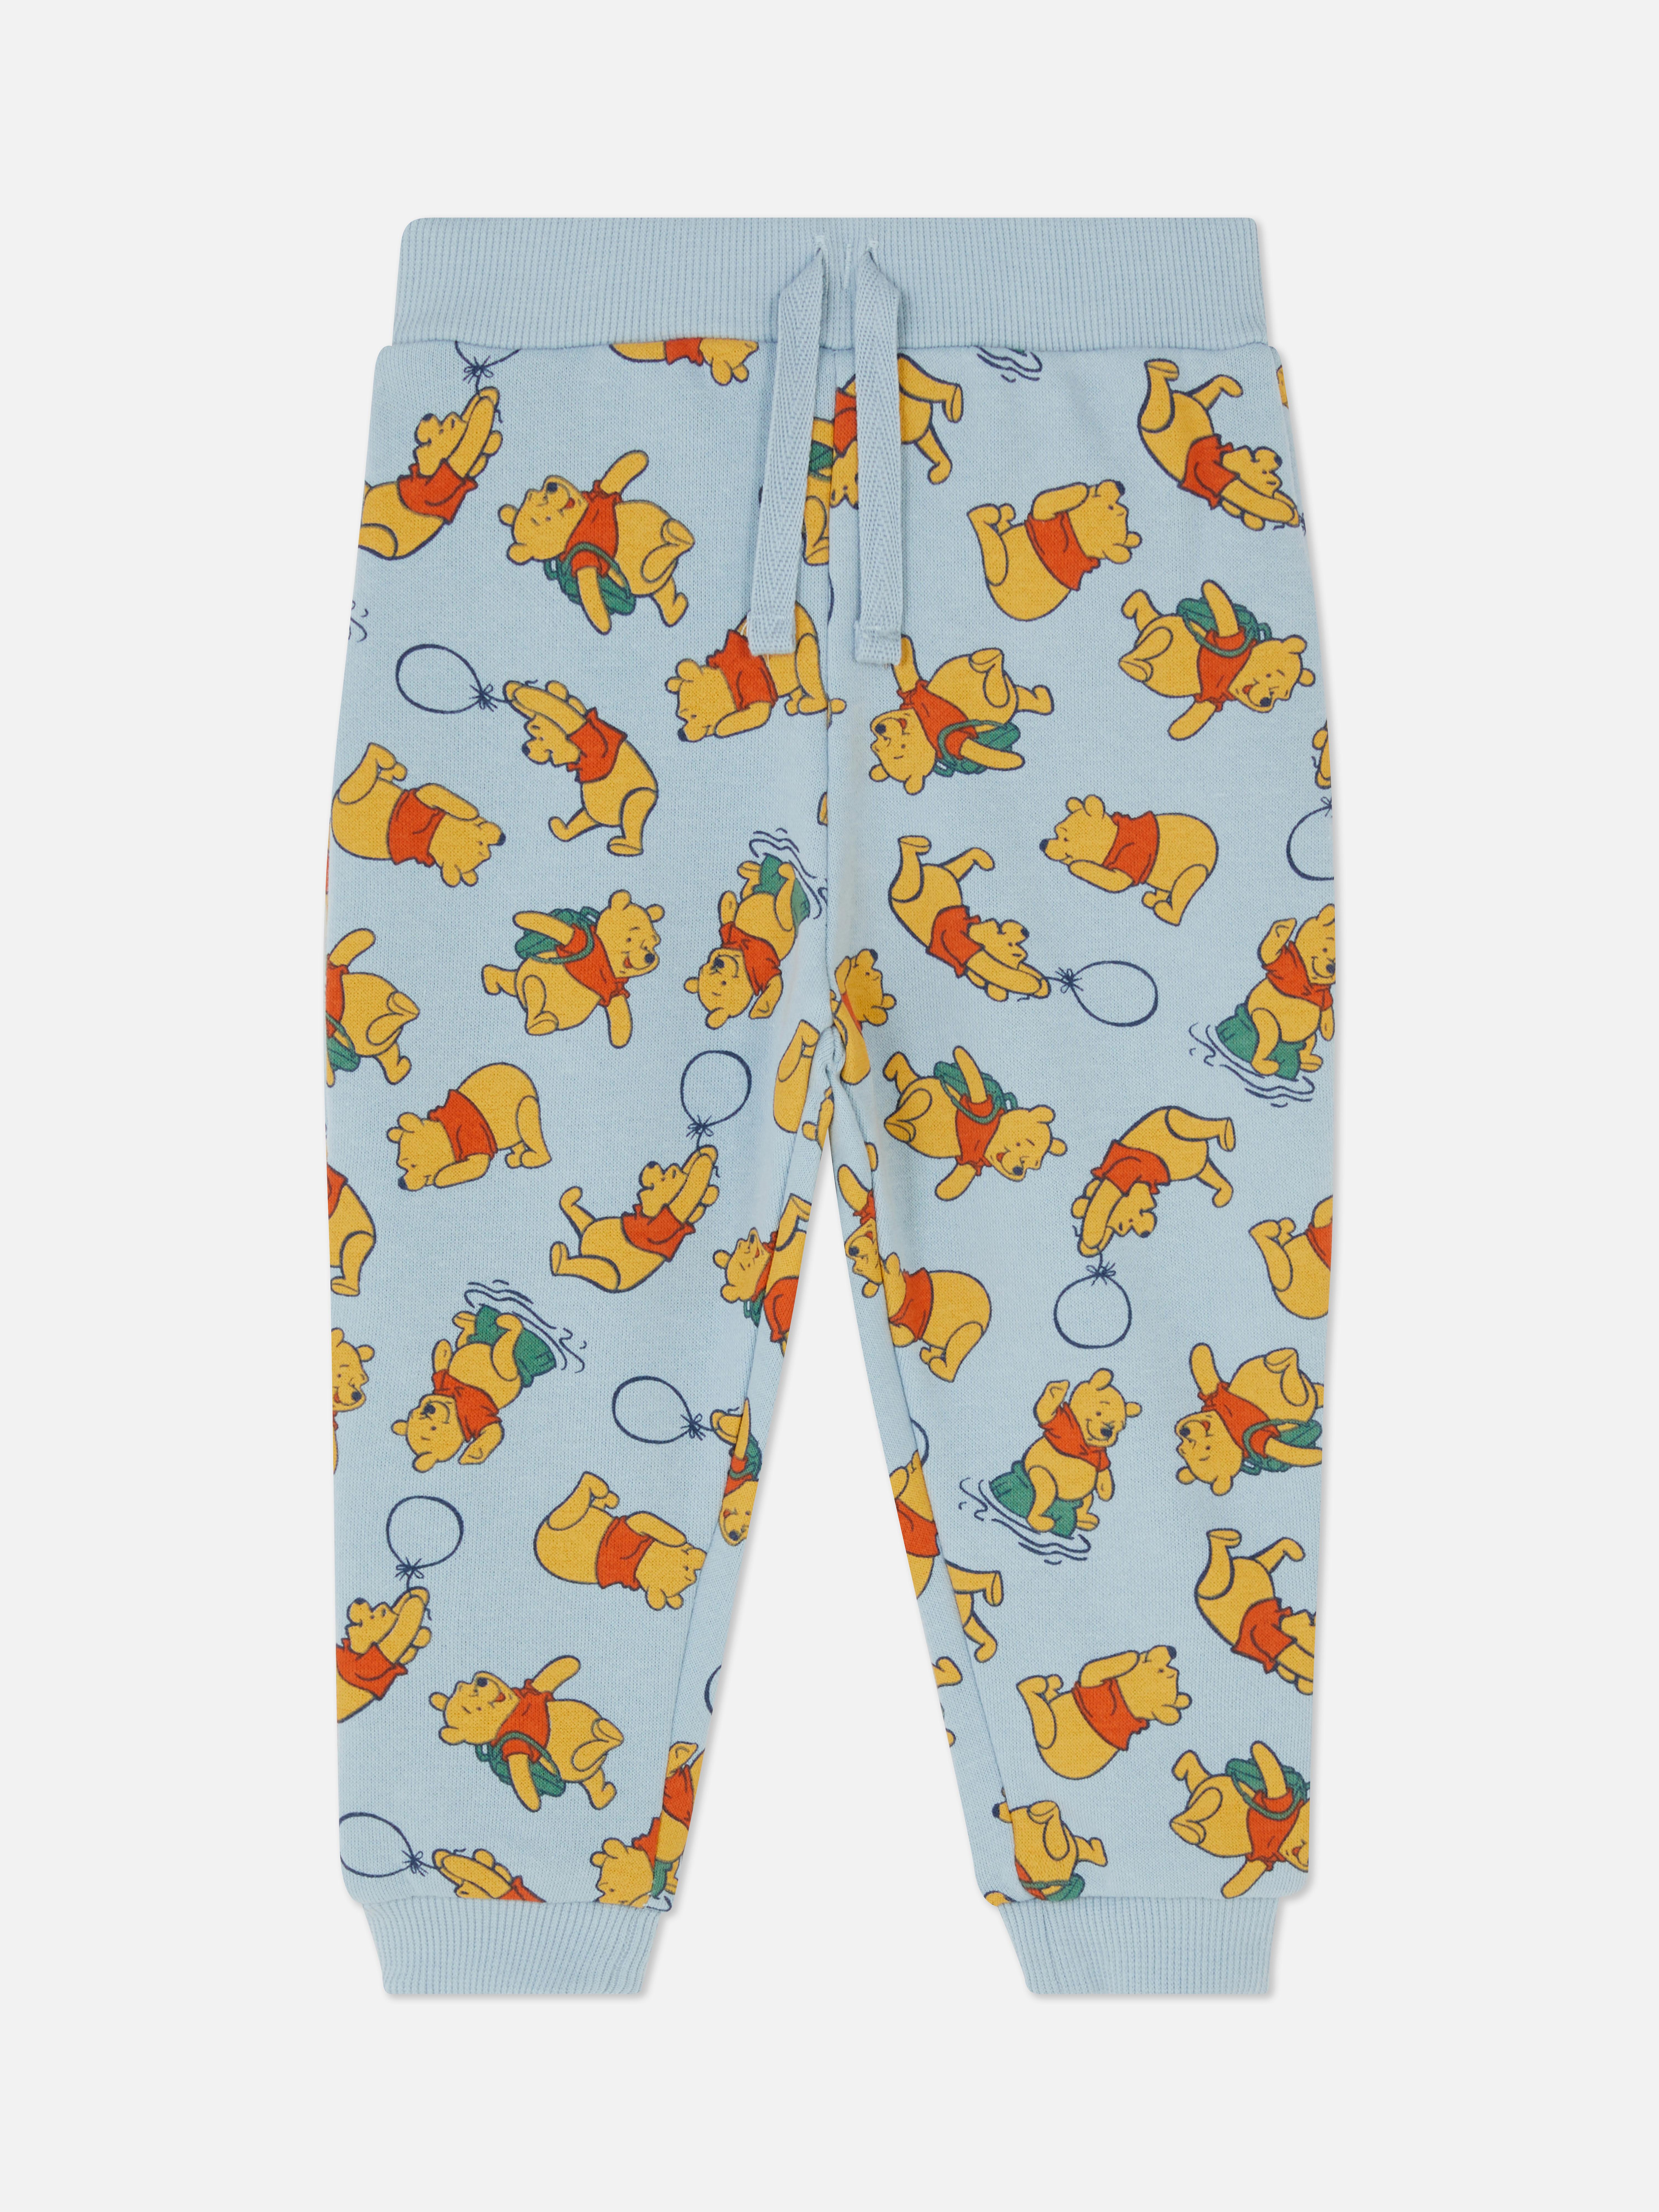 Disney’s Winnie the Pooh Joggers